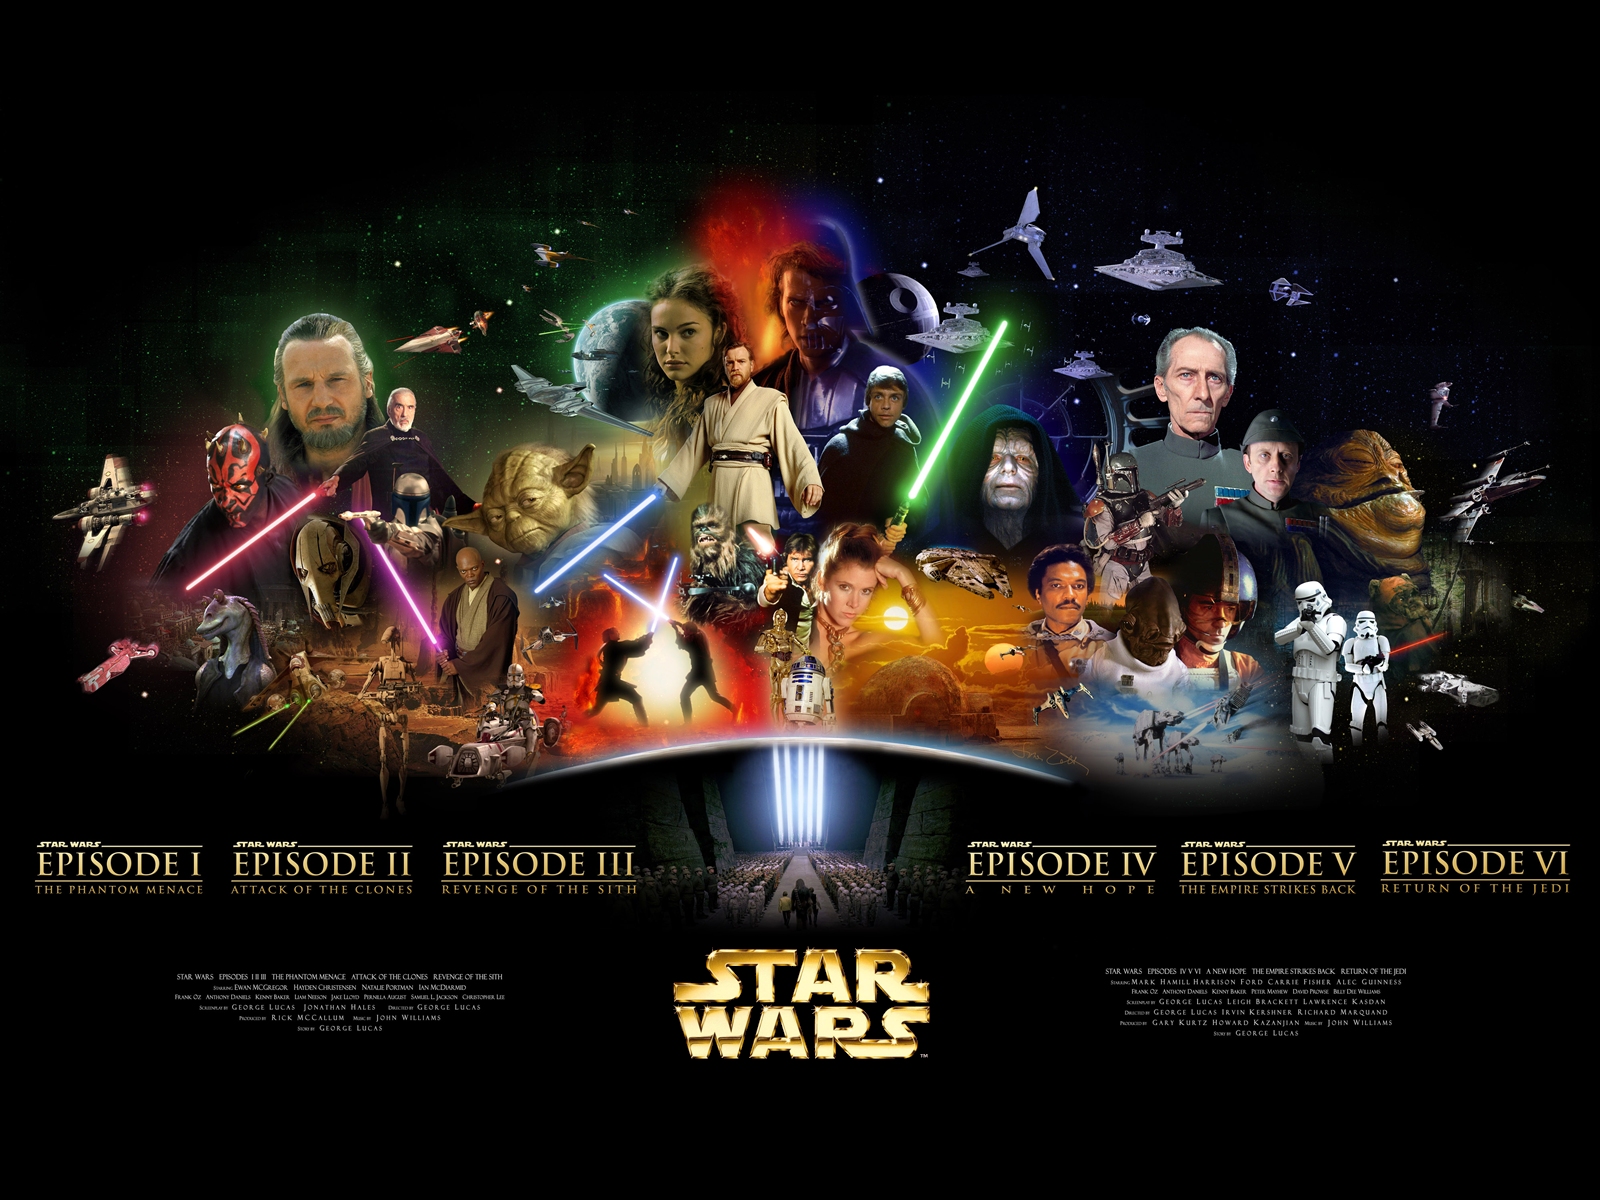 "Star Wars" movie poster desktop wallpaper (1600 x 1200 pixels)